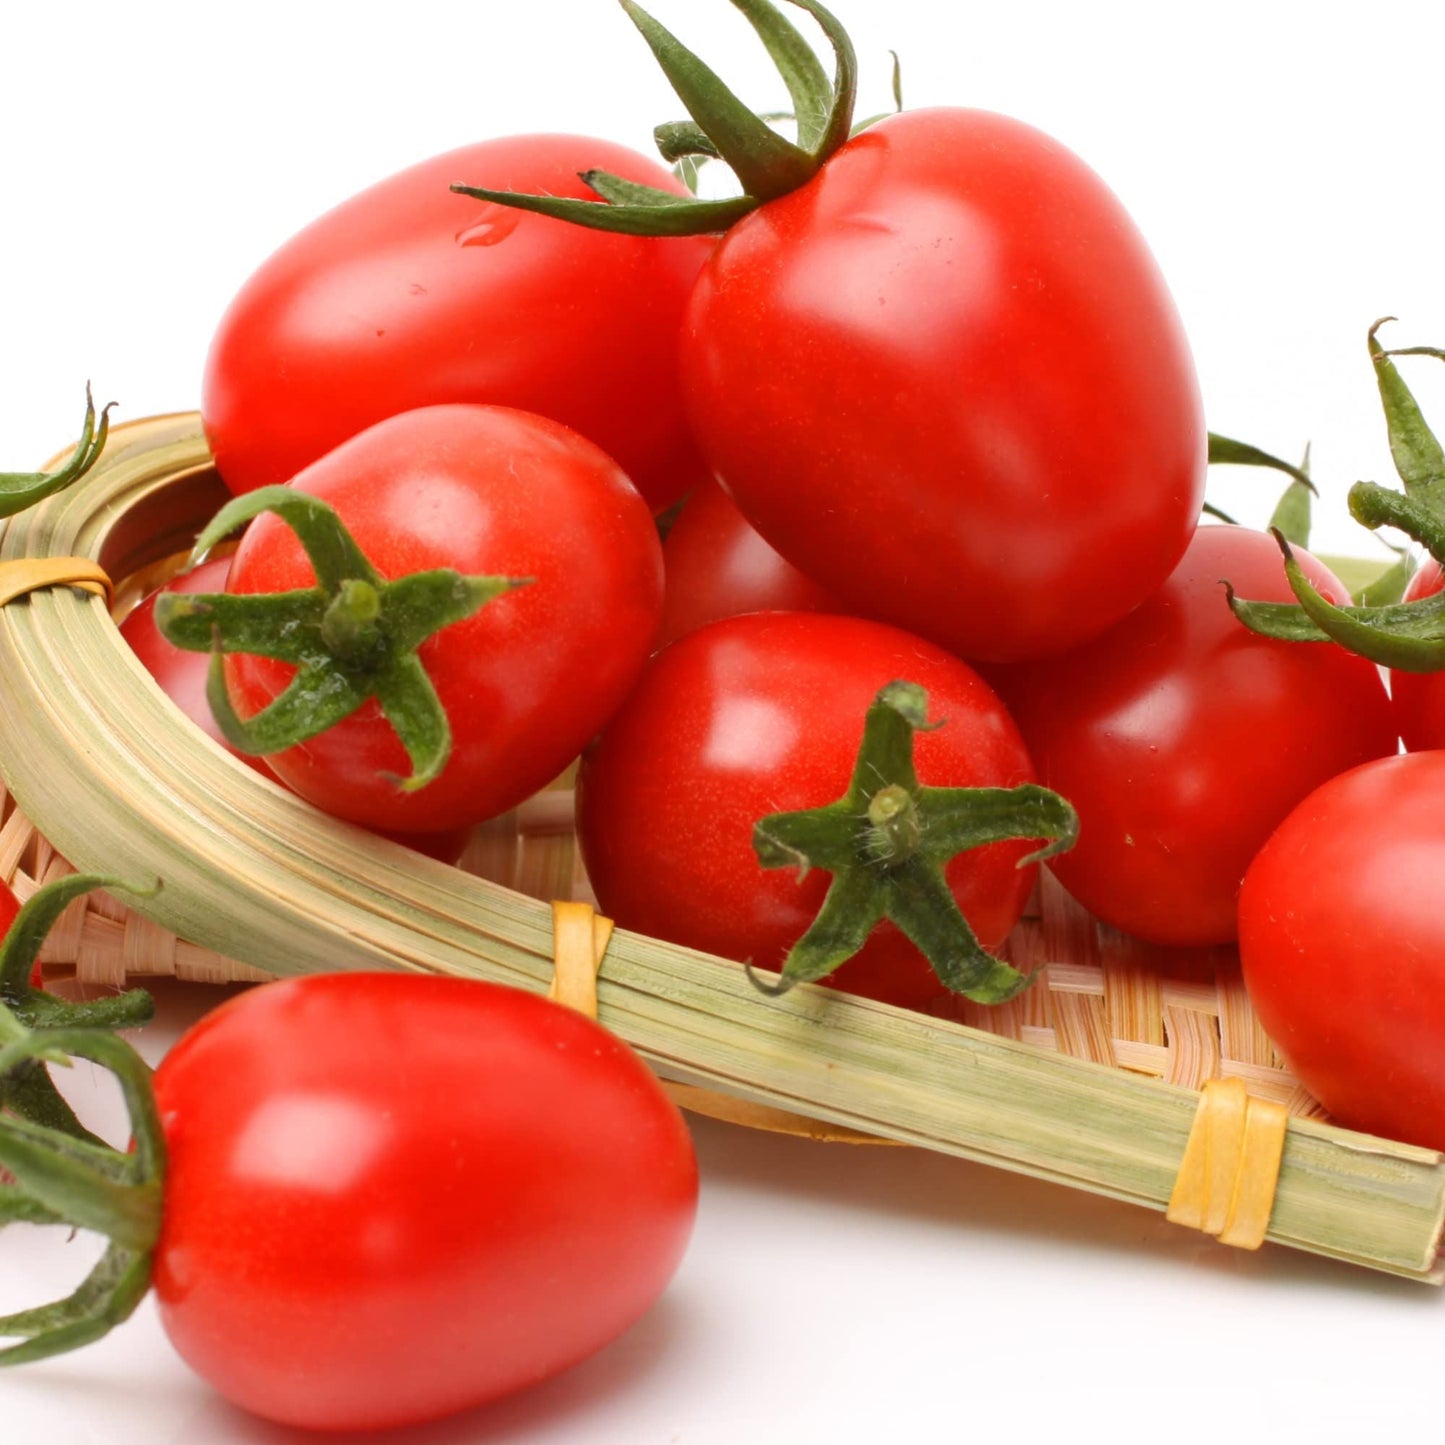 Tomato Plants - 'Plum Roma' - 6 x Plug Plant Pack - AcquaGarden